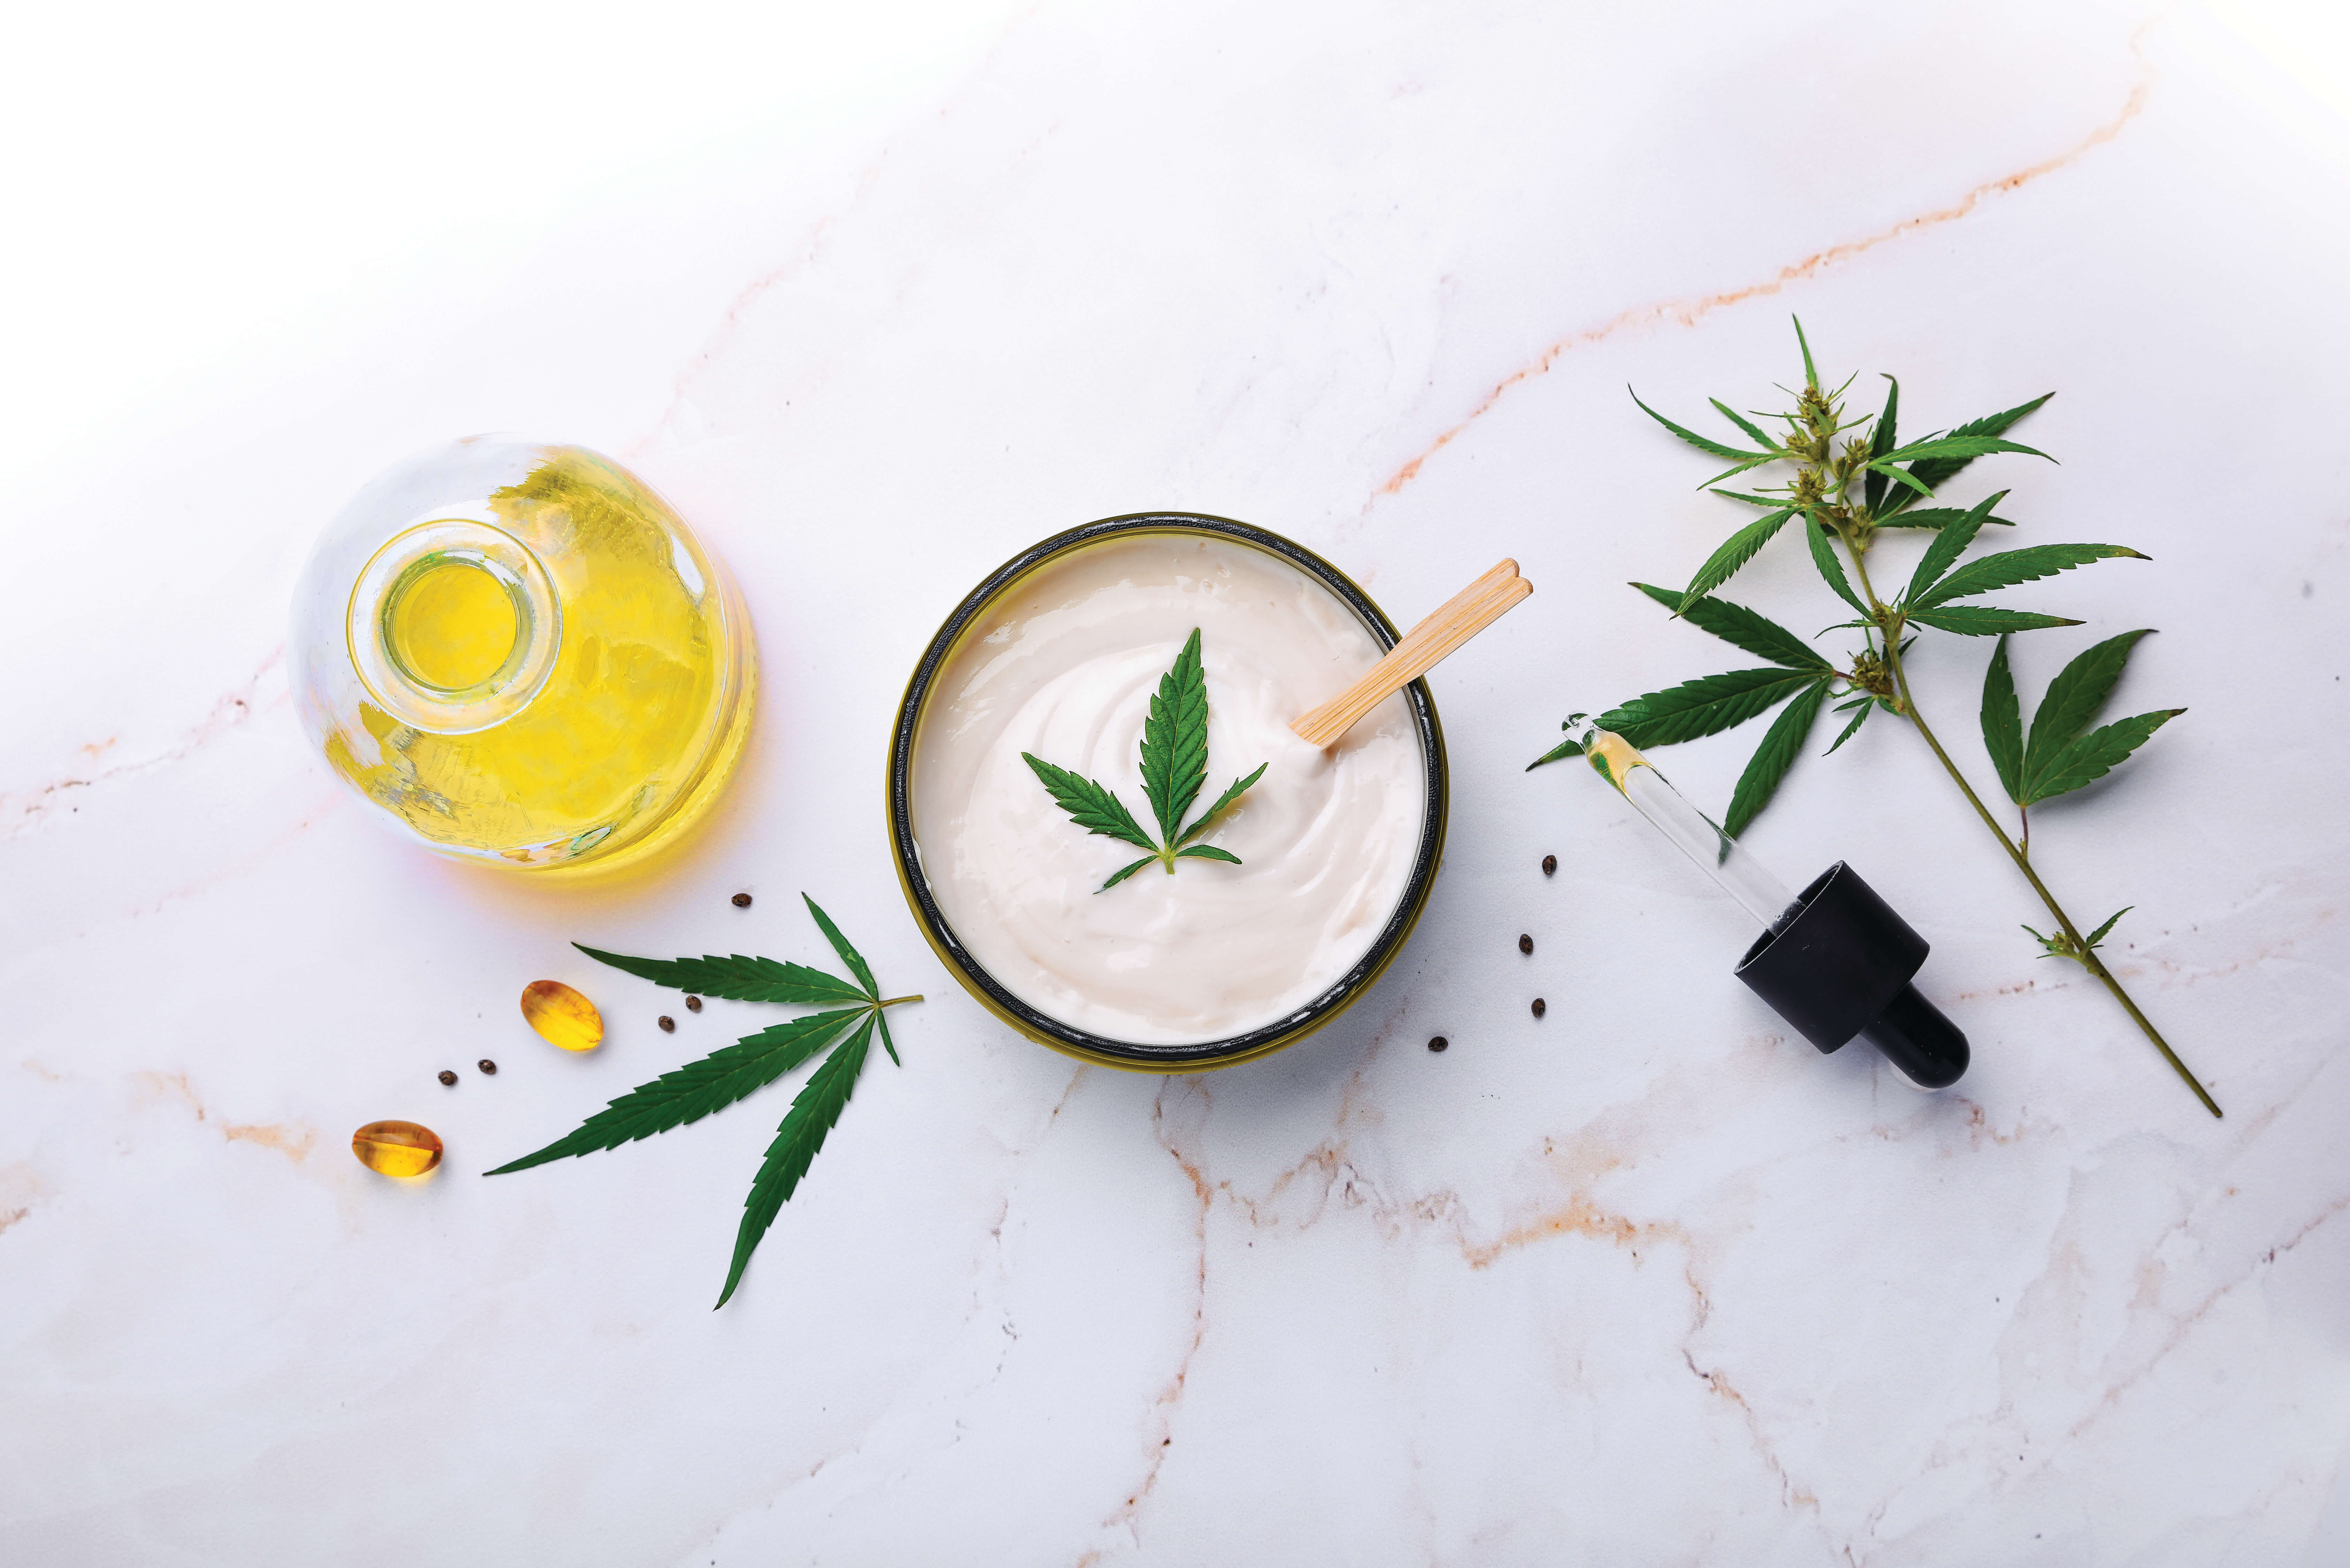 Jar of hemp white lotion. Cannabis cream with marijuana leaf – cannabis concept. Flat lay, top view.